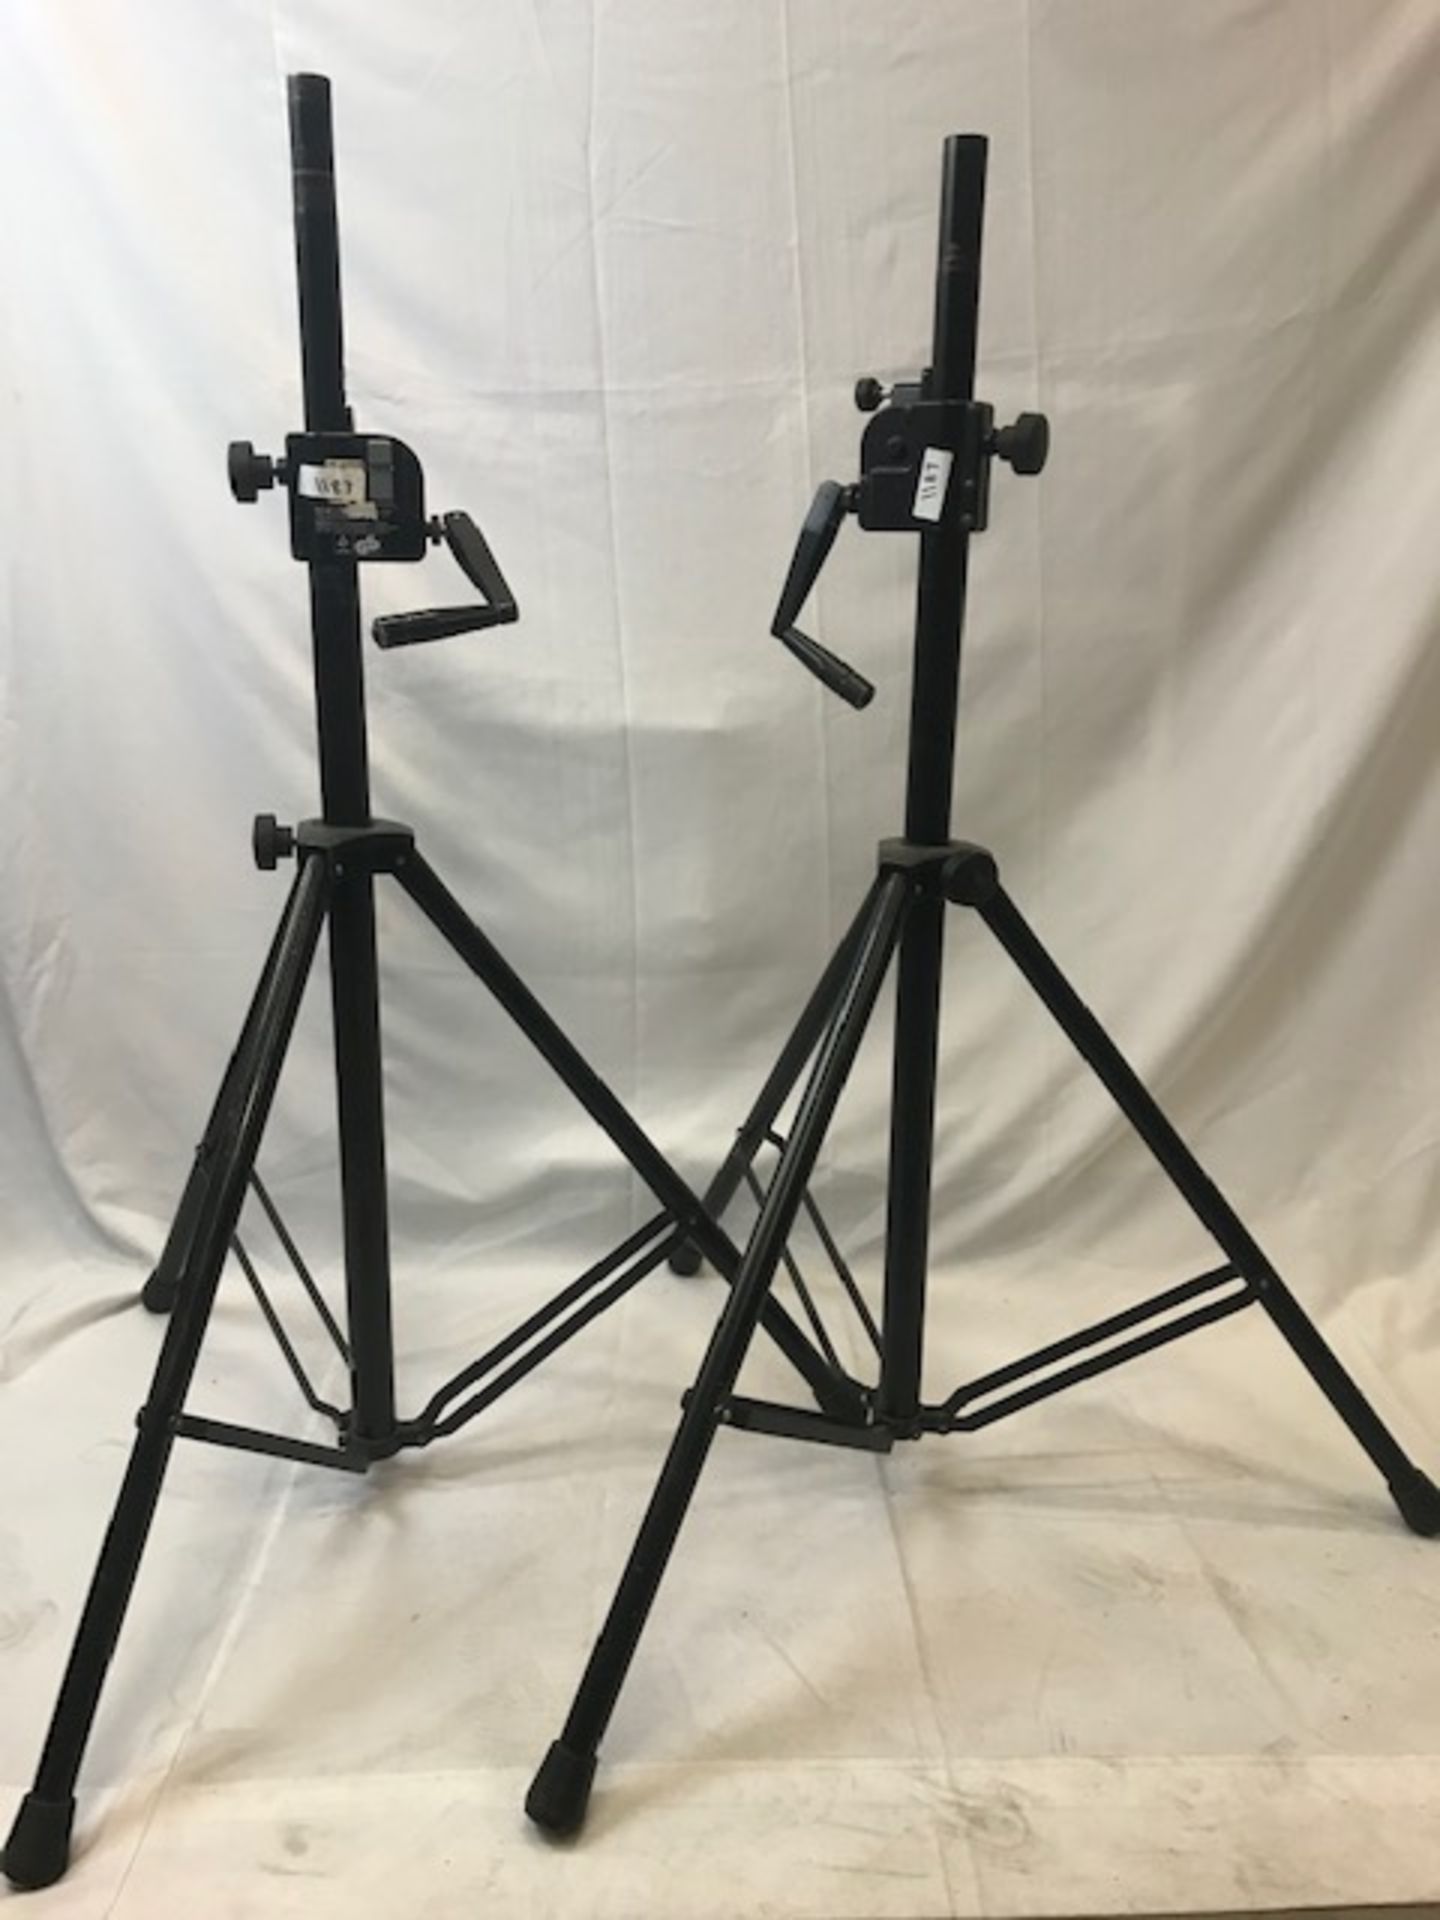 1 x Pair of wind up speaker stands - Ref: 1187 - CL581 - Location: Altrincham WA14